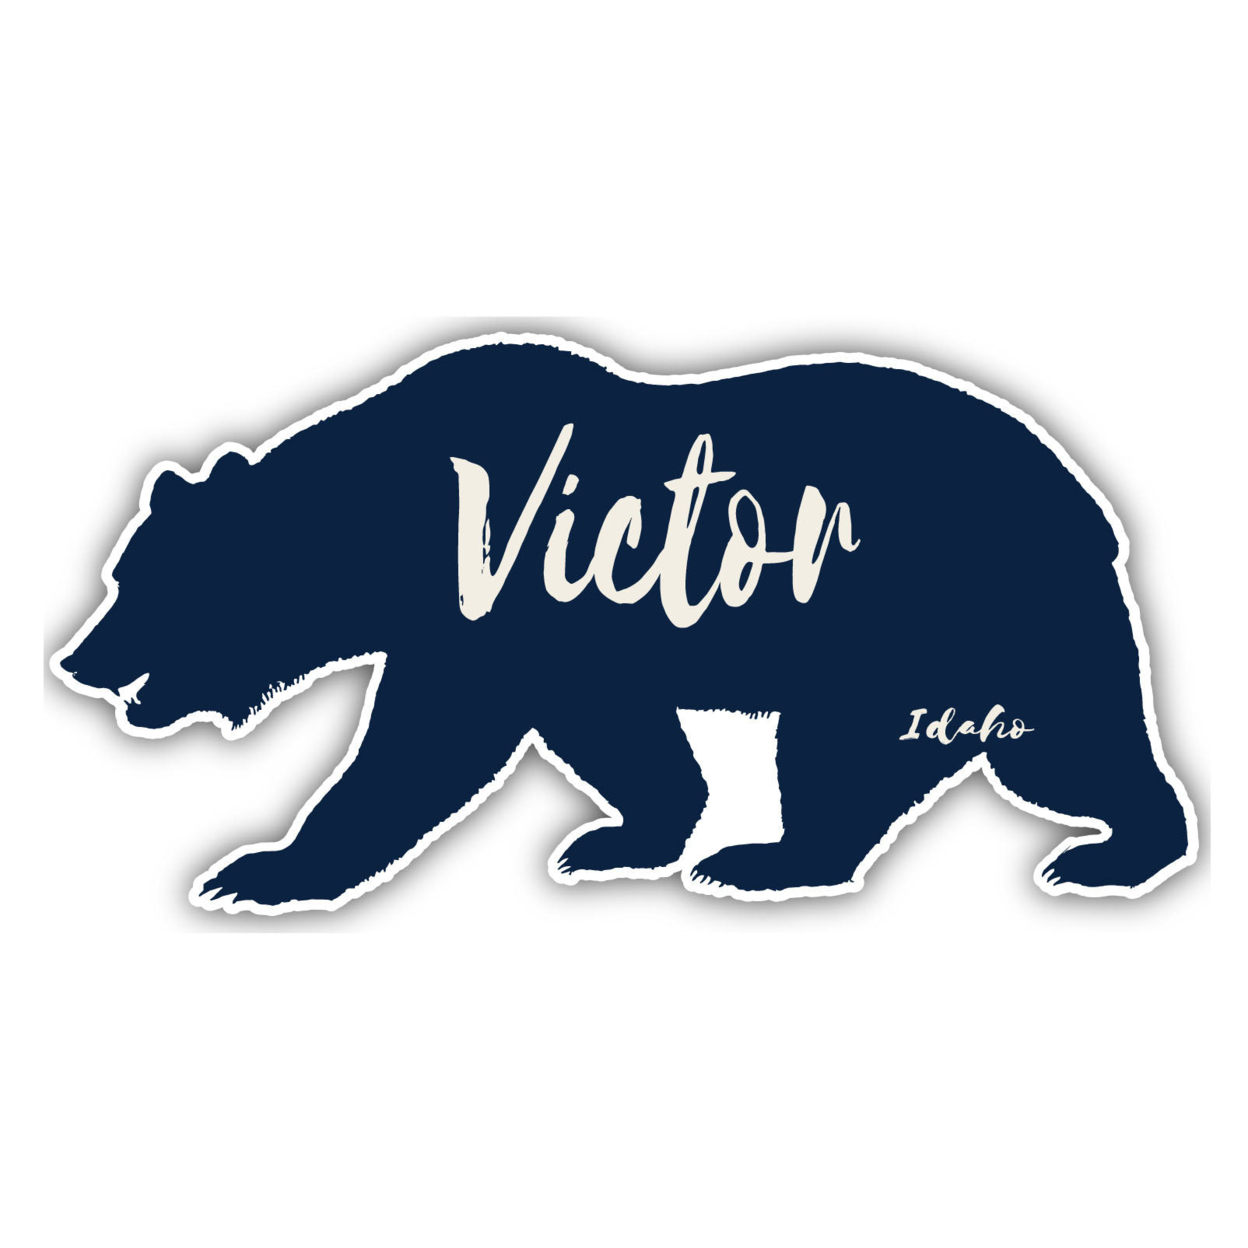 Victor Idaho Souvenir Decorative Stickers (Choose Theme And Size) - Single Unit, 4-Inch, Bear